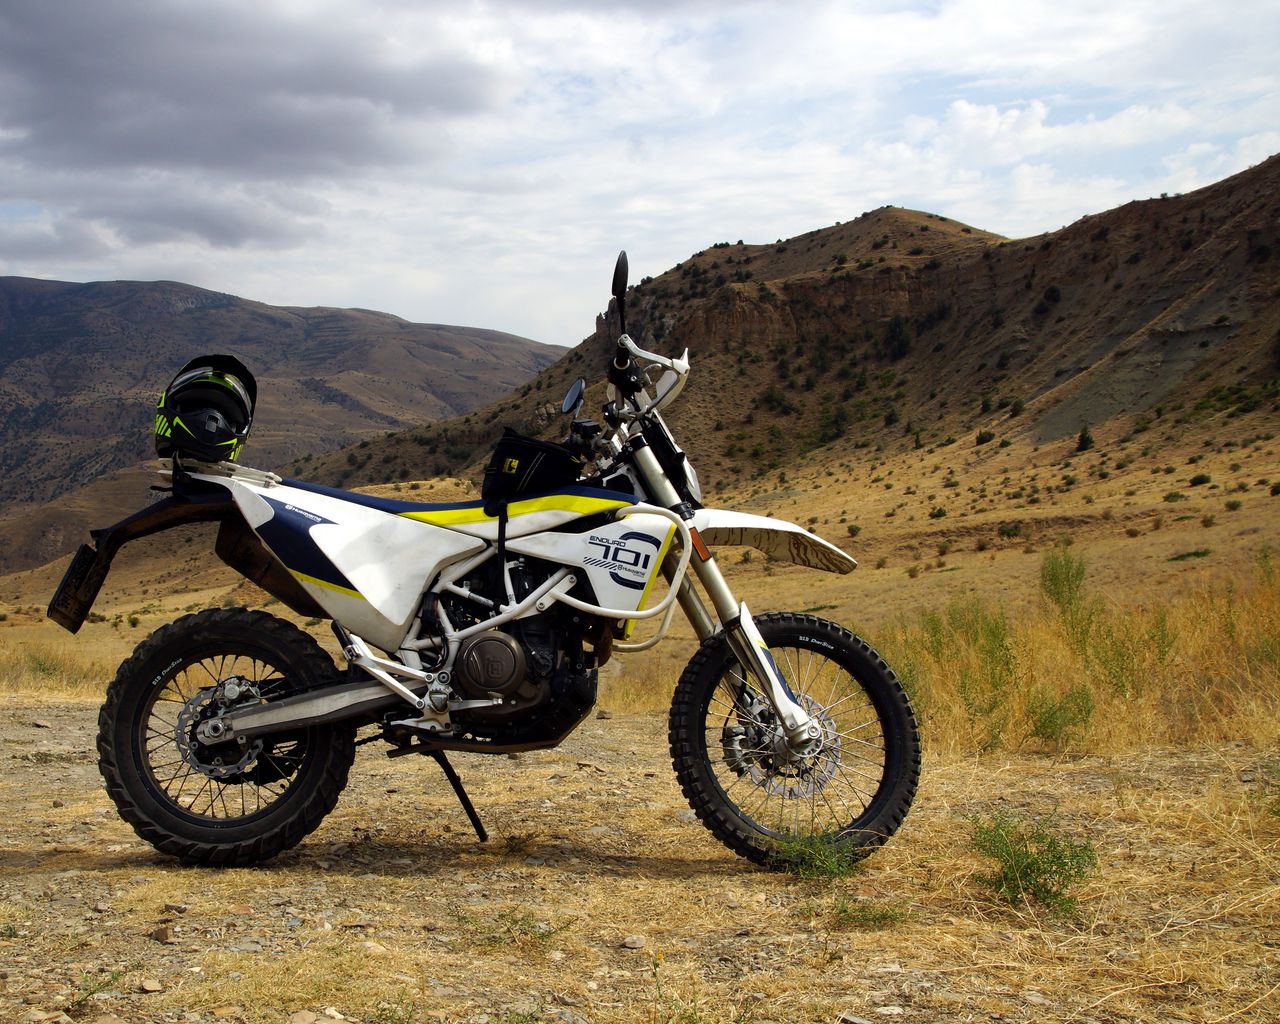 1280x1024 Wallpaper motorcycle, bike, mountains, nature